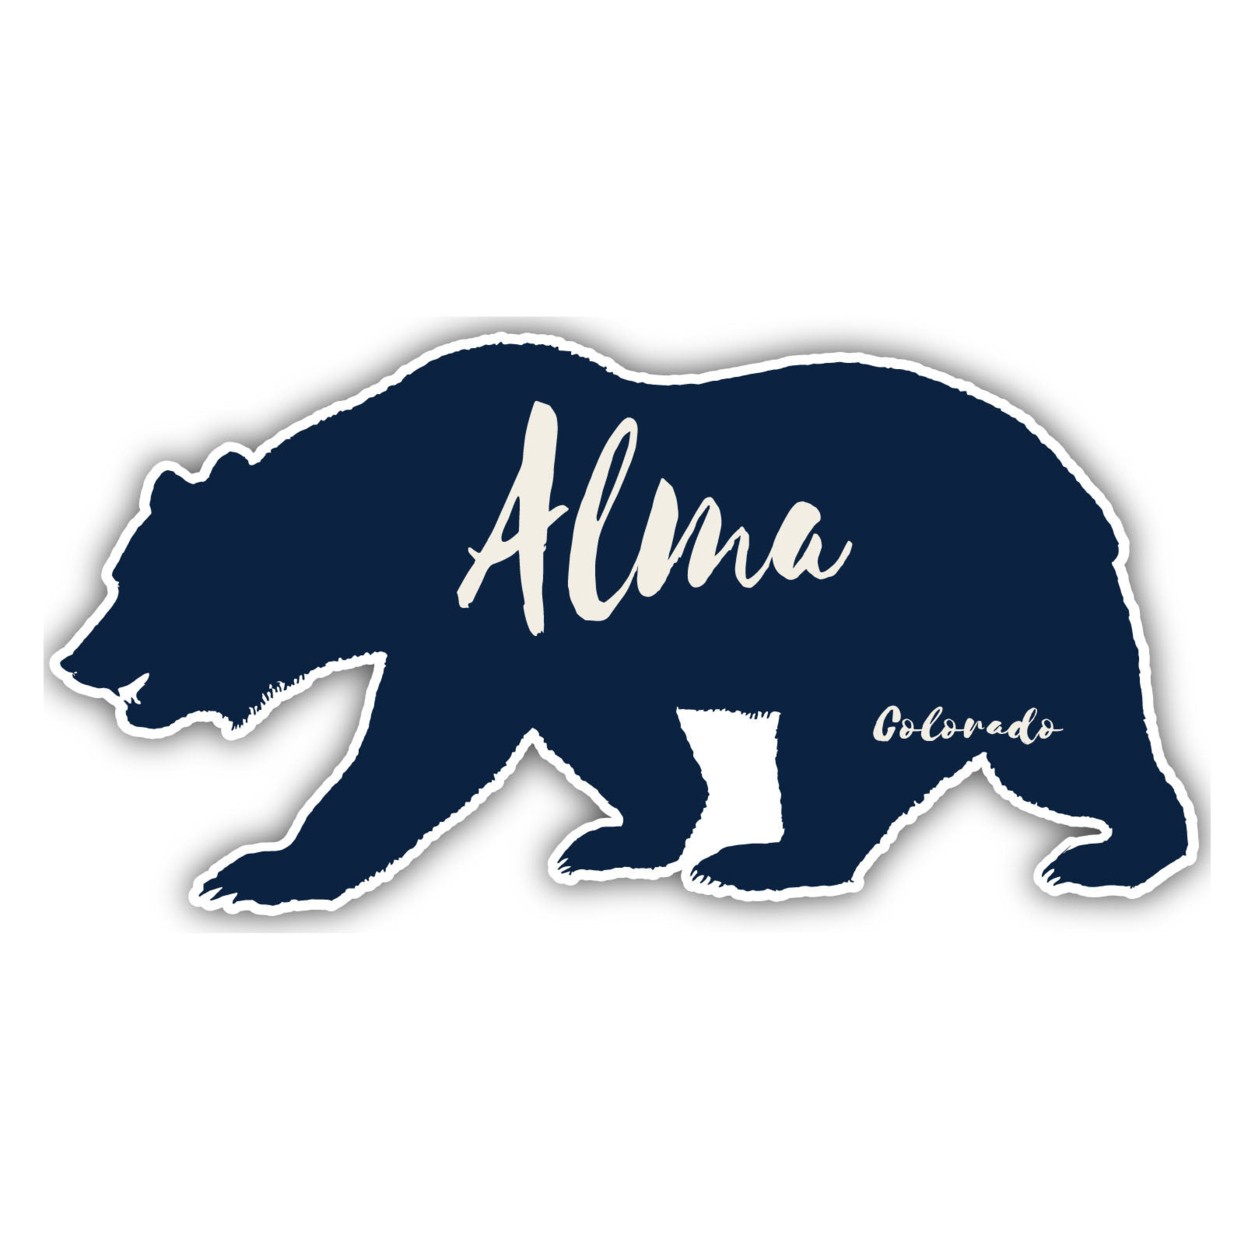 Alma Colorado Souvenir Decorative Stickers (Choose Theme And Size) - 4-Pack, 4-Inch, Tent